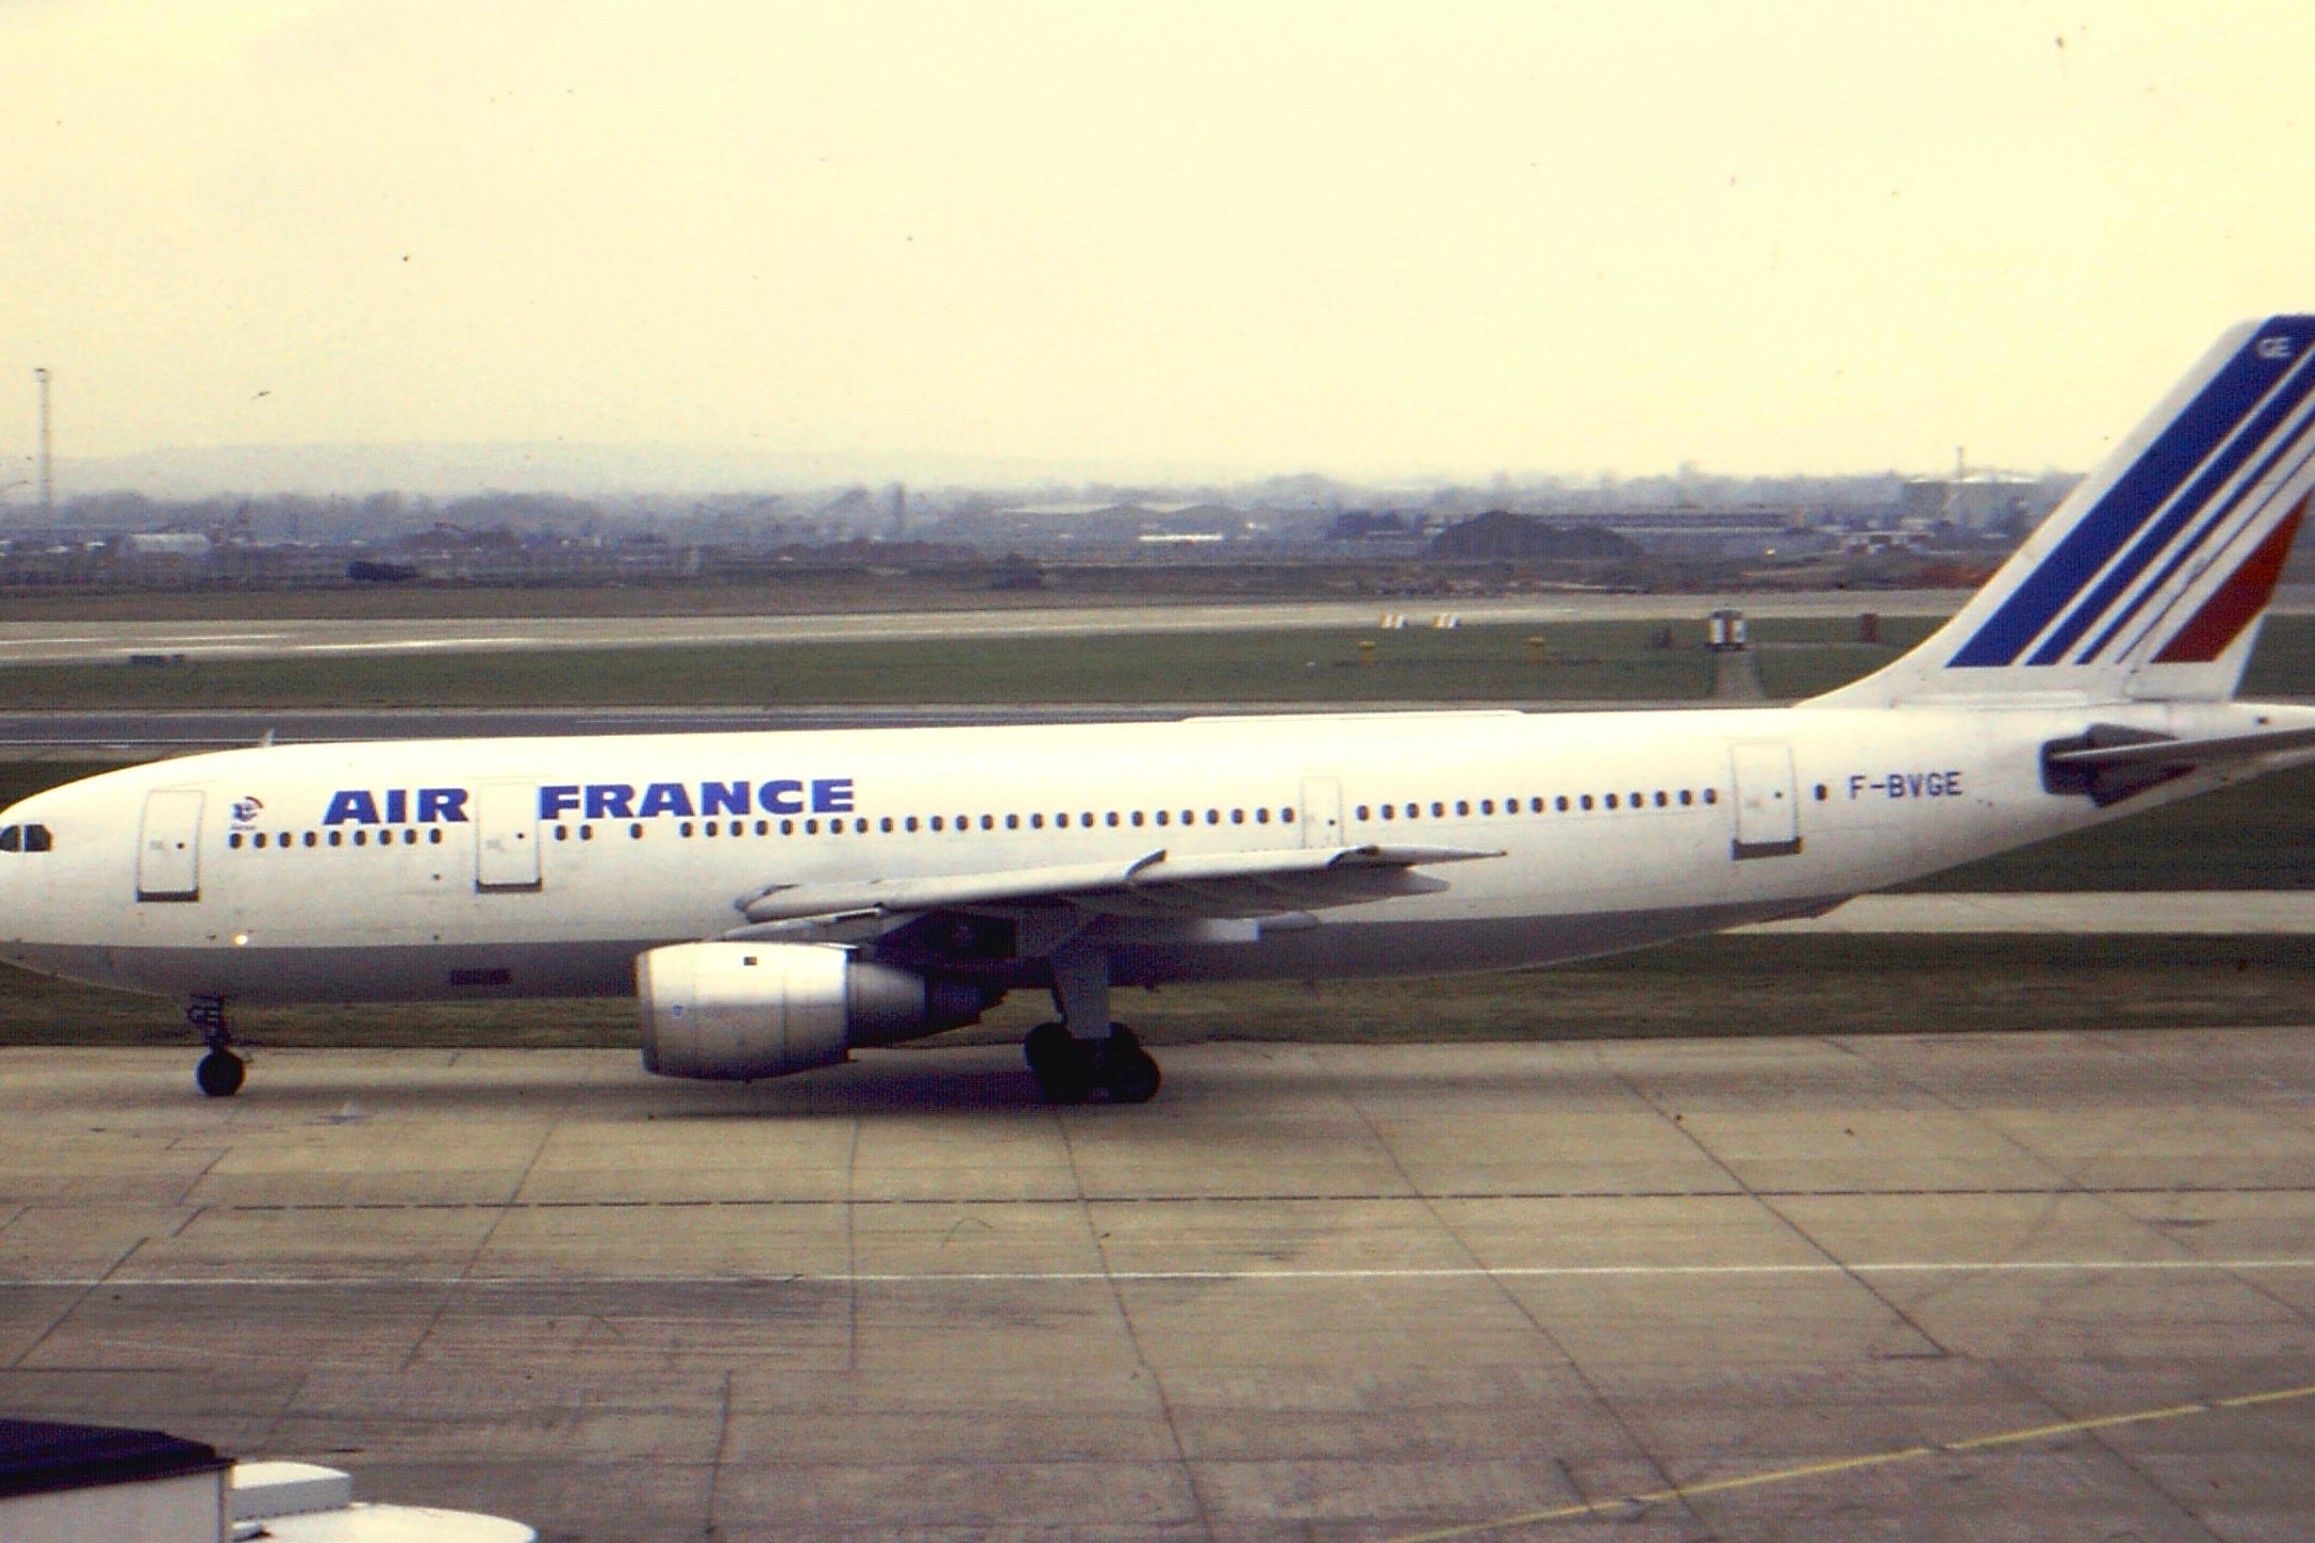 An Air France Airbus A300 on an airport apron.